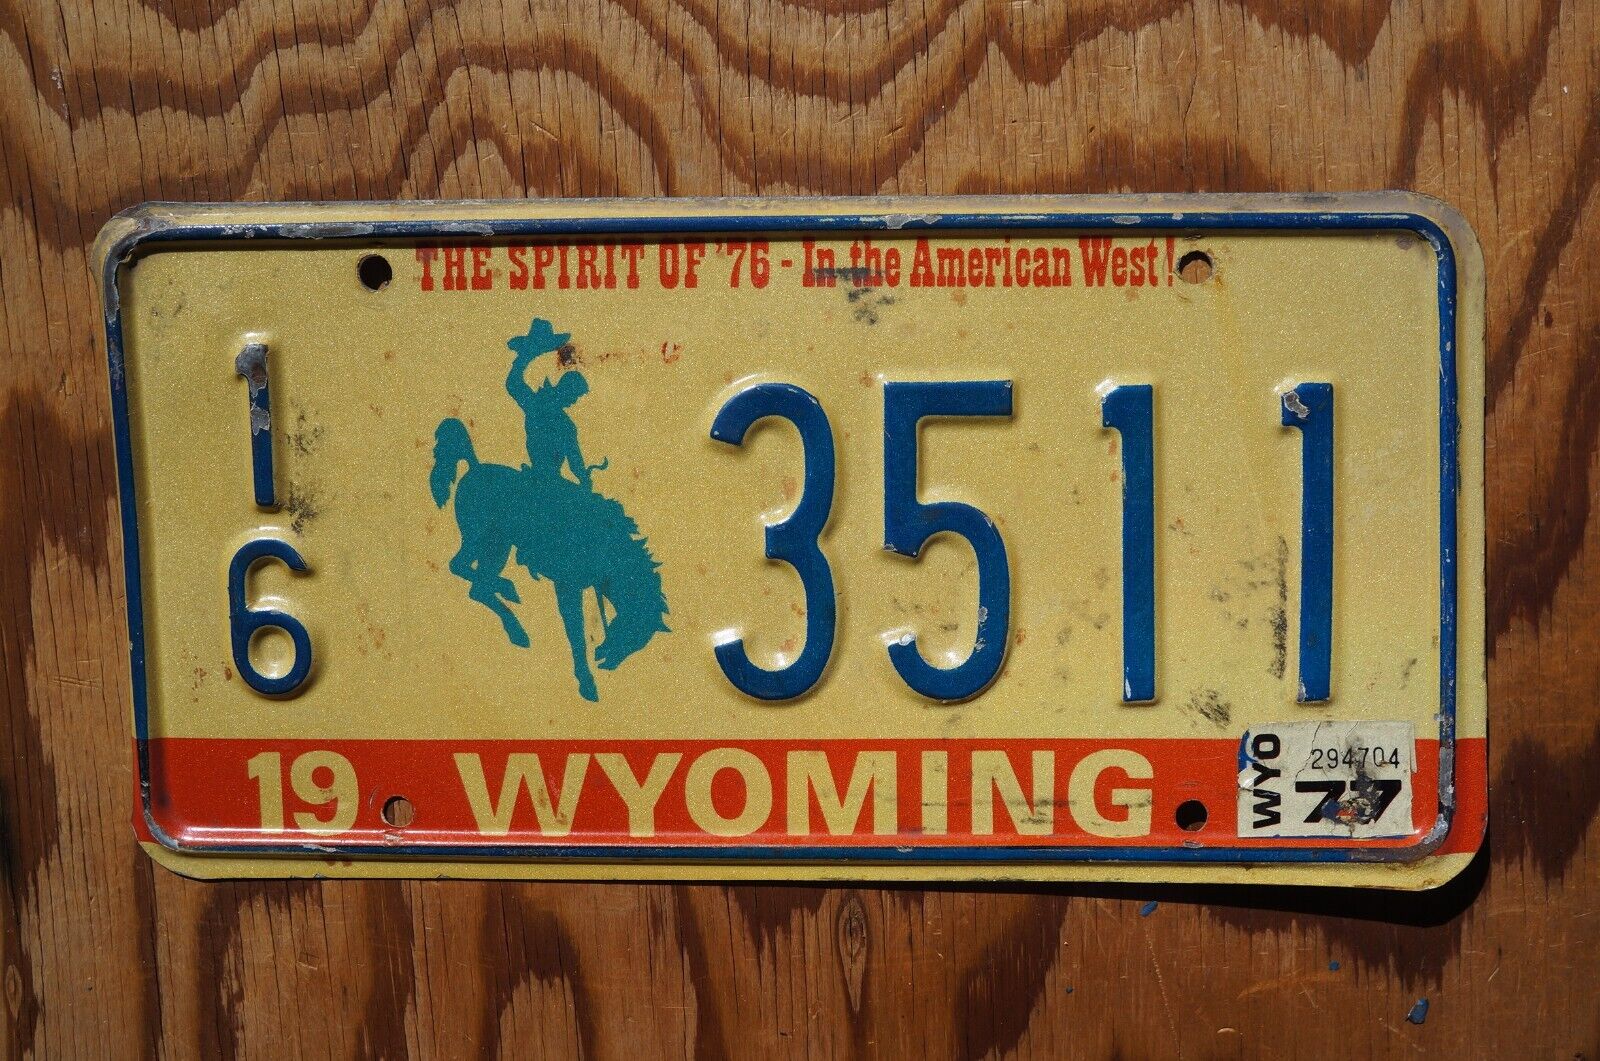 1976 1977 Wyoming BICENTENNIAL License Plate # 16 - 3511